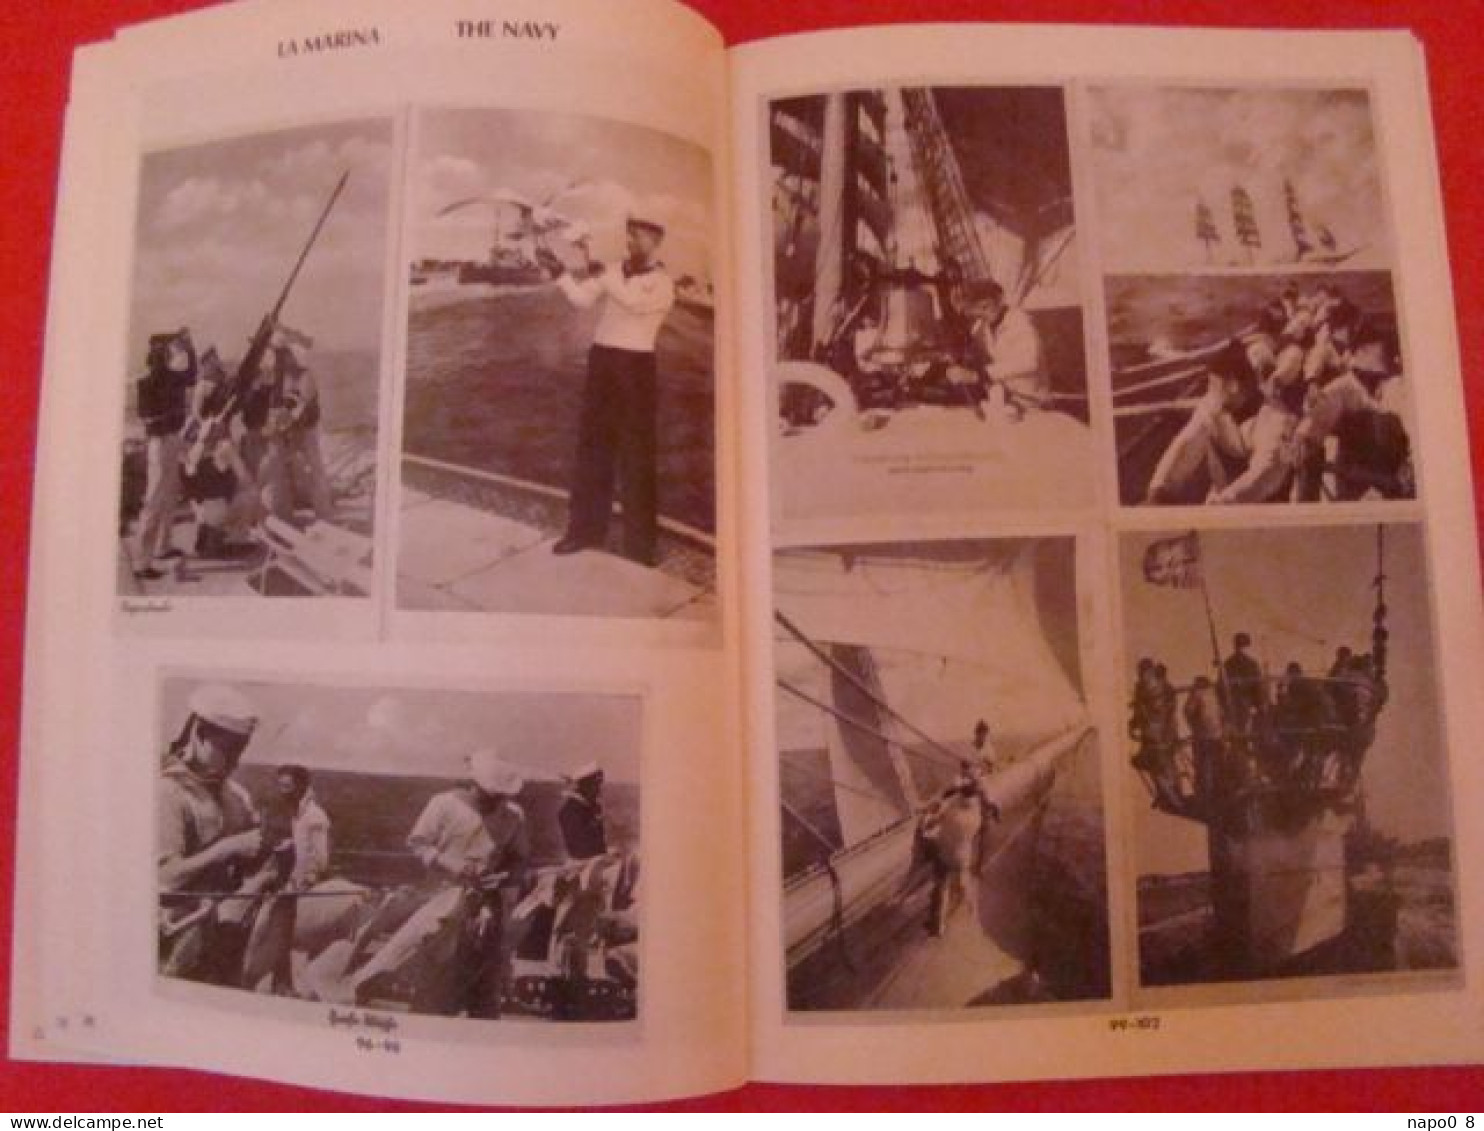 193361945 Le cartoline delle force armate tedesche par Ivo Fossati  Franco Mesturini